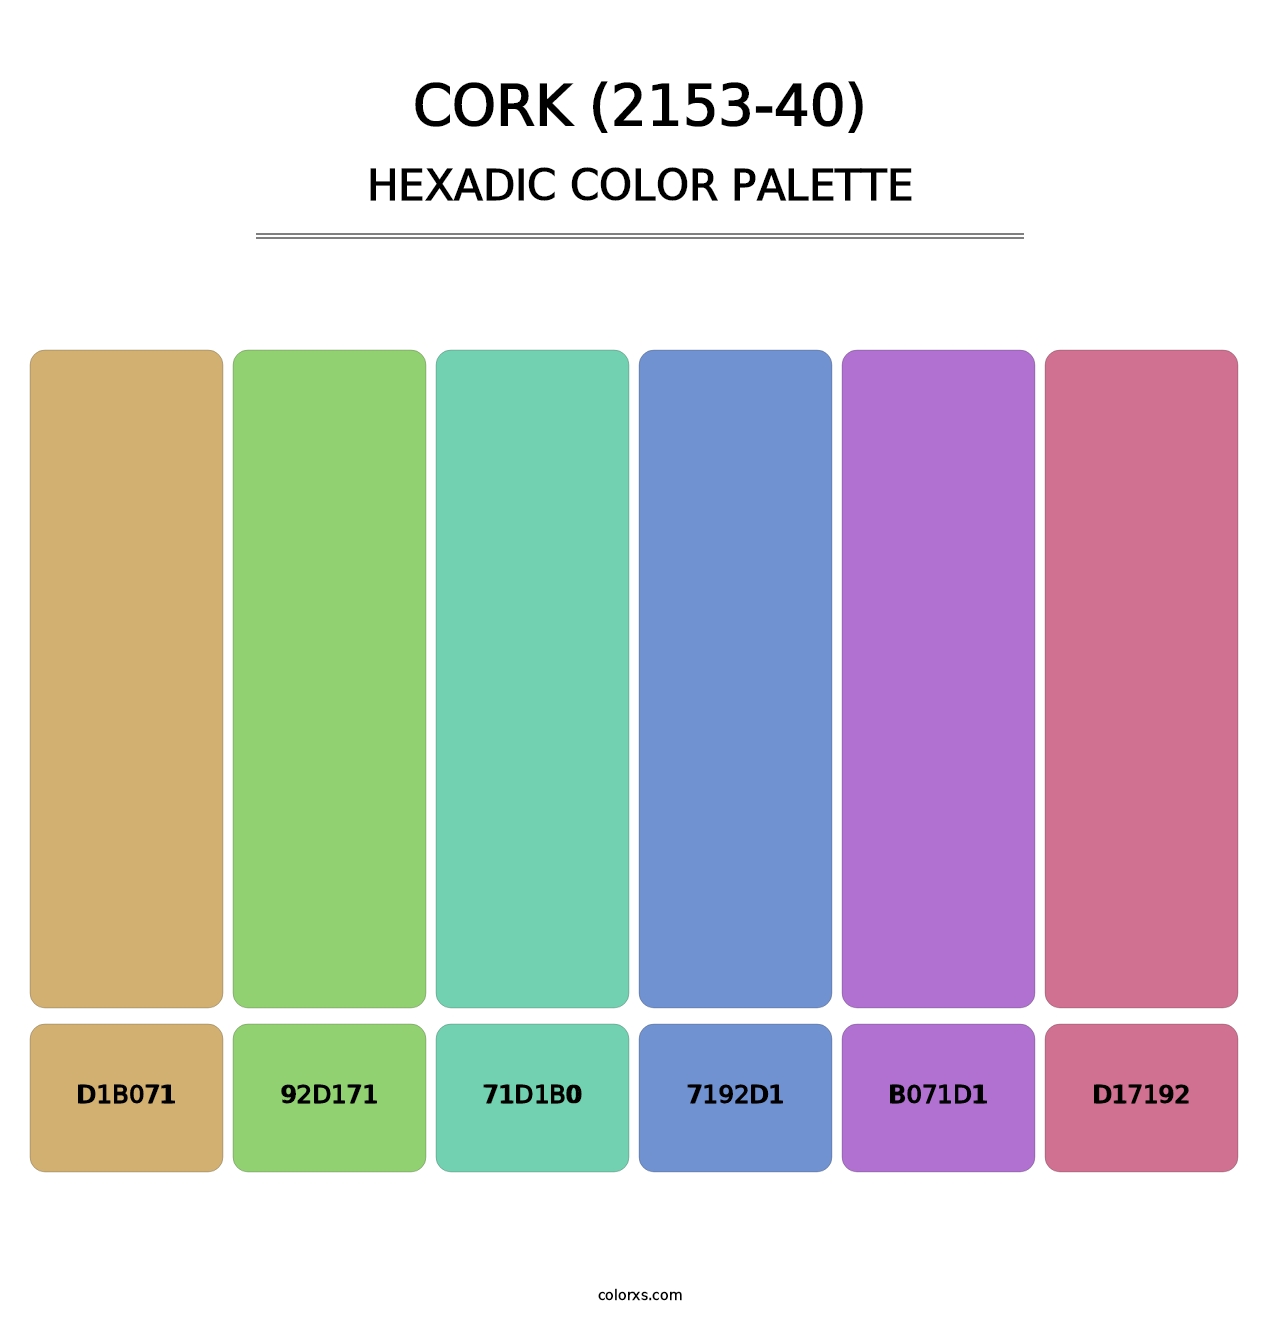 Cork (2153-40) - Hexadic Color Palette